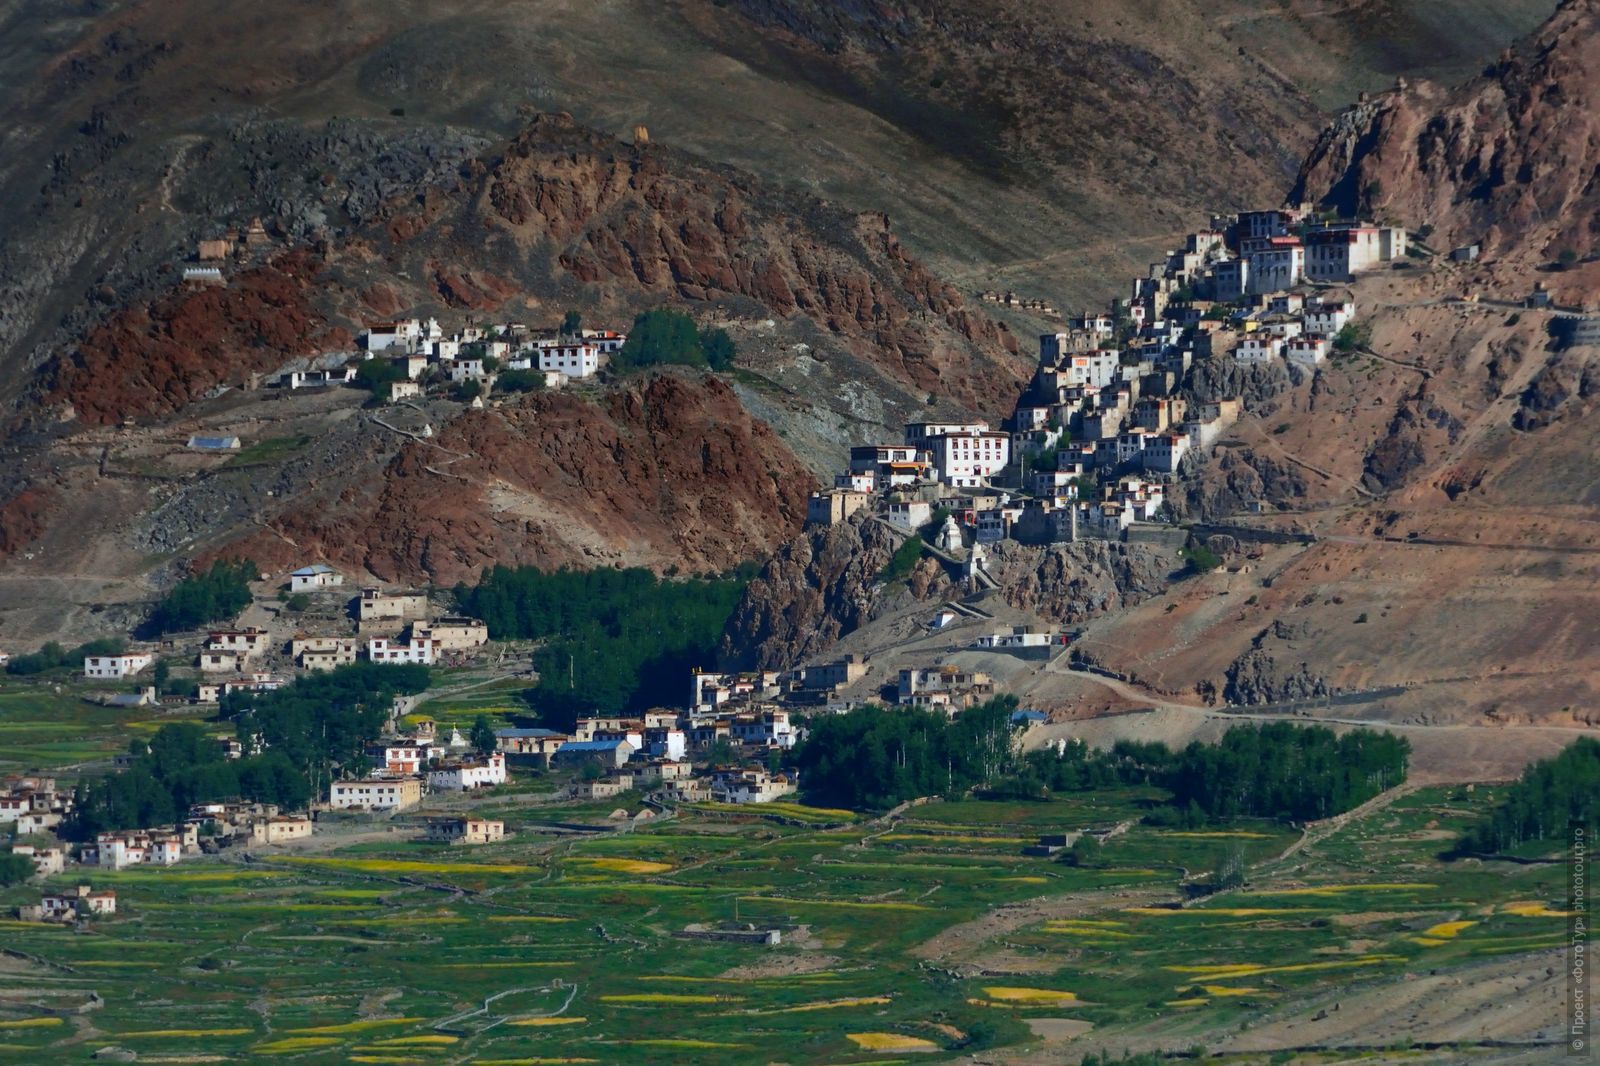 Деревня Карча и буддийский монастырь Карча Гонпа над ней, Занскар.